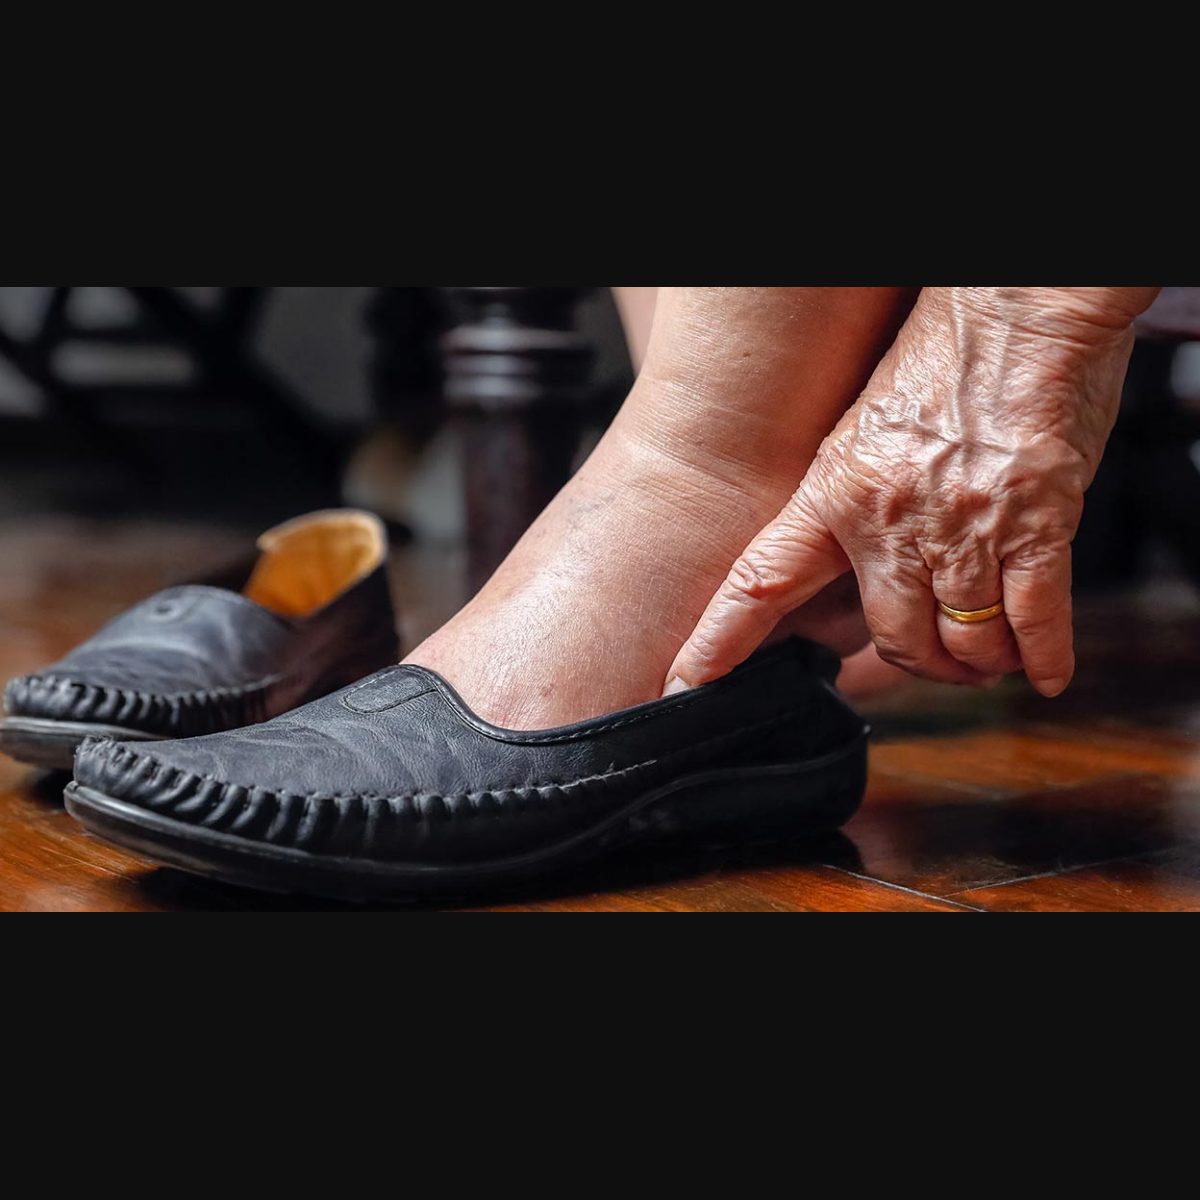 Swollen feet and ankles in elderly